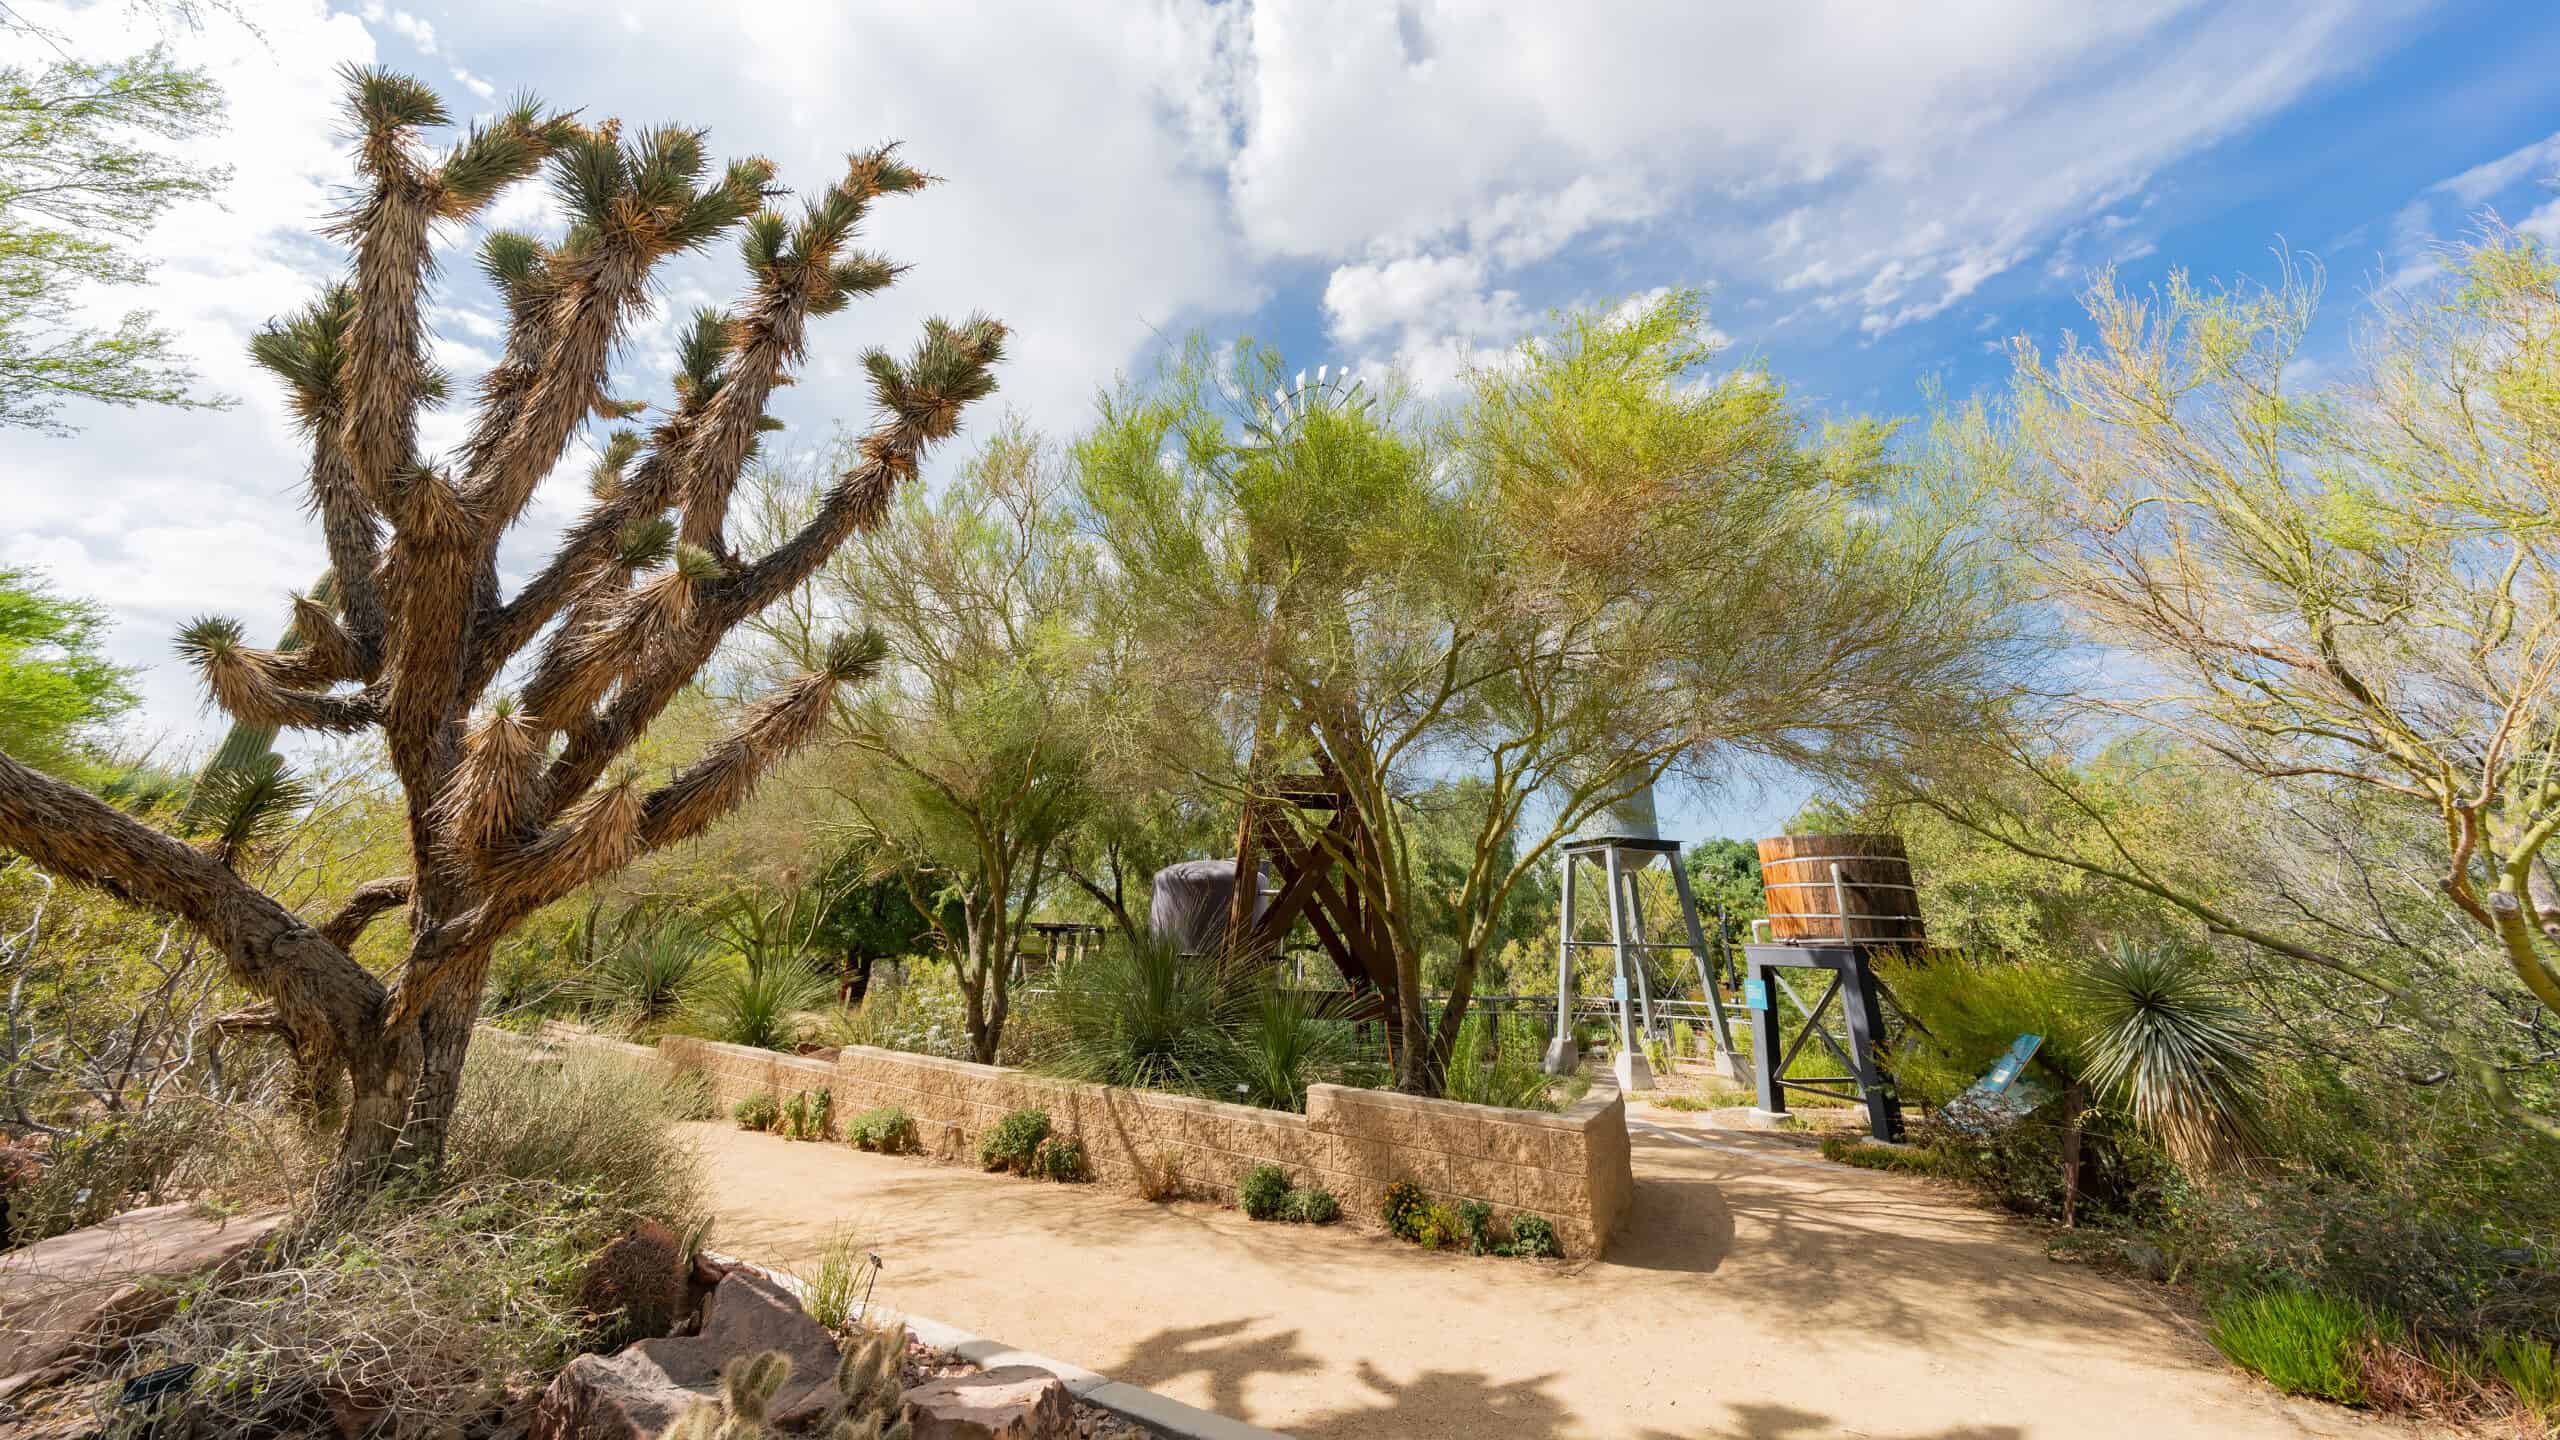 Botanical,Garden,Of,Springs,Preserve,At,Las,Vegas,,Nevada